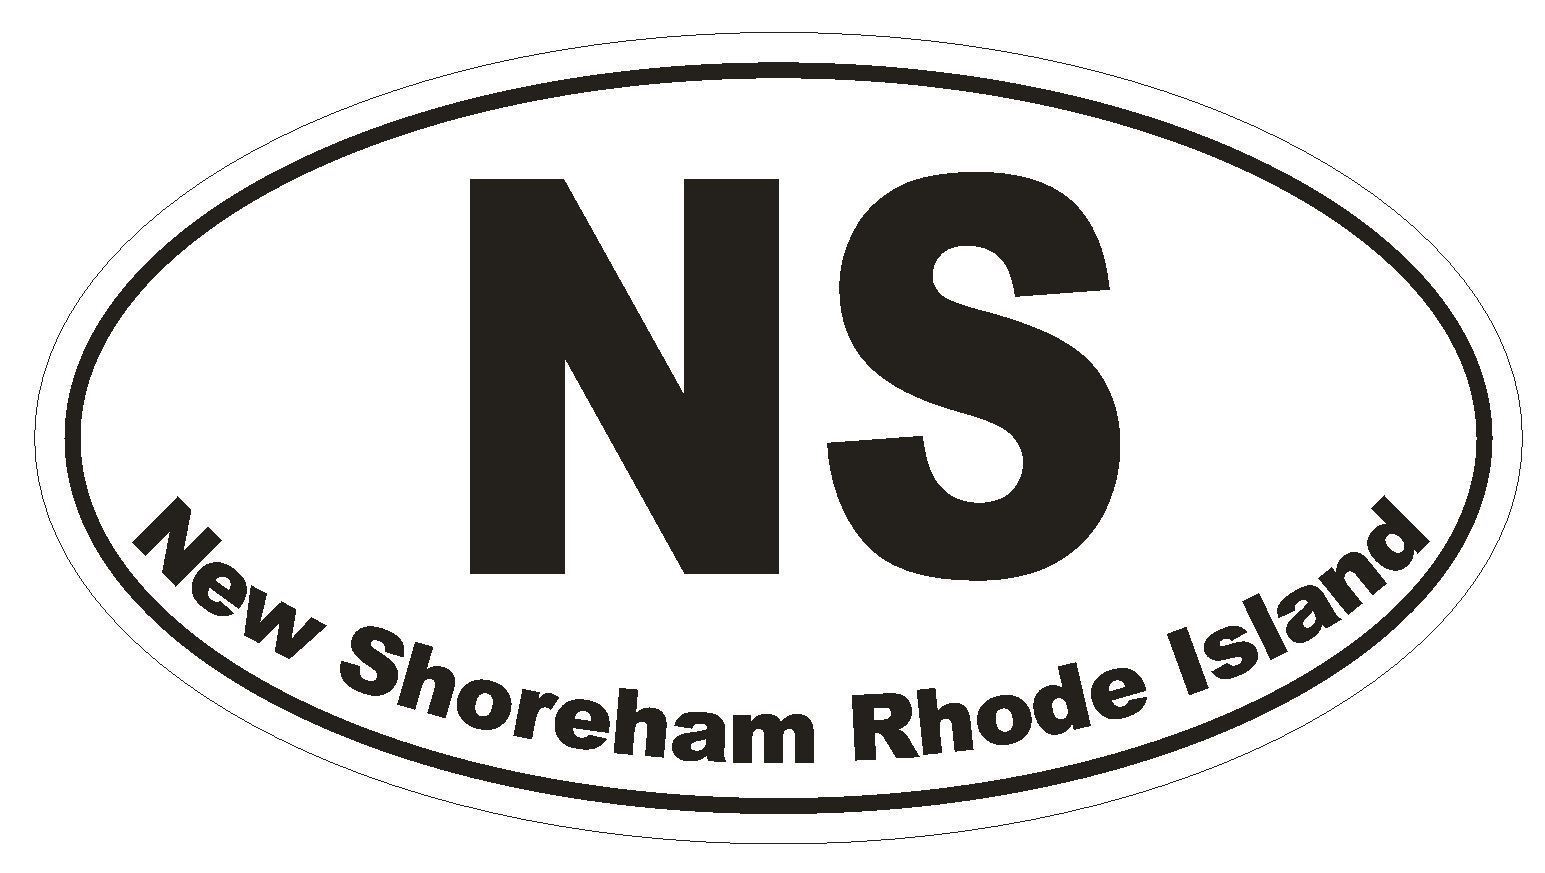 New Shoreham Rhode Island Oval Bumper Sticker or Helmet Sticker D1521 Euro Oval - $1.39 - $75.00